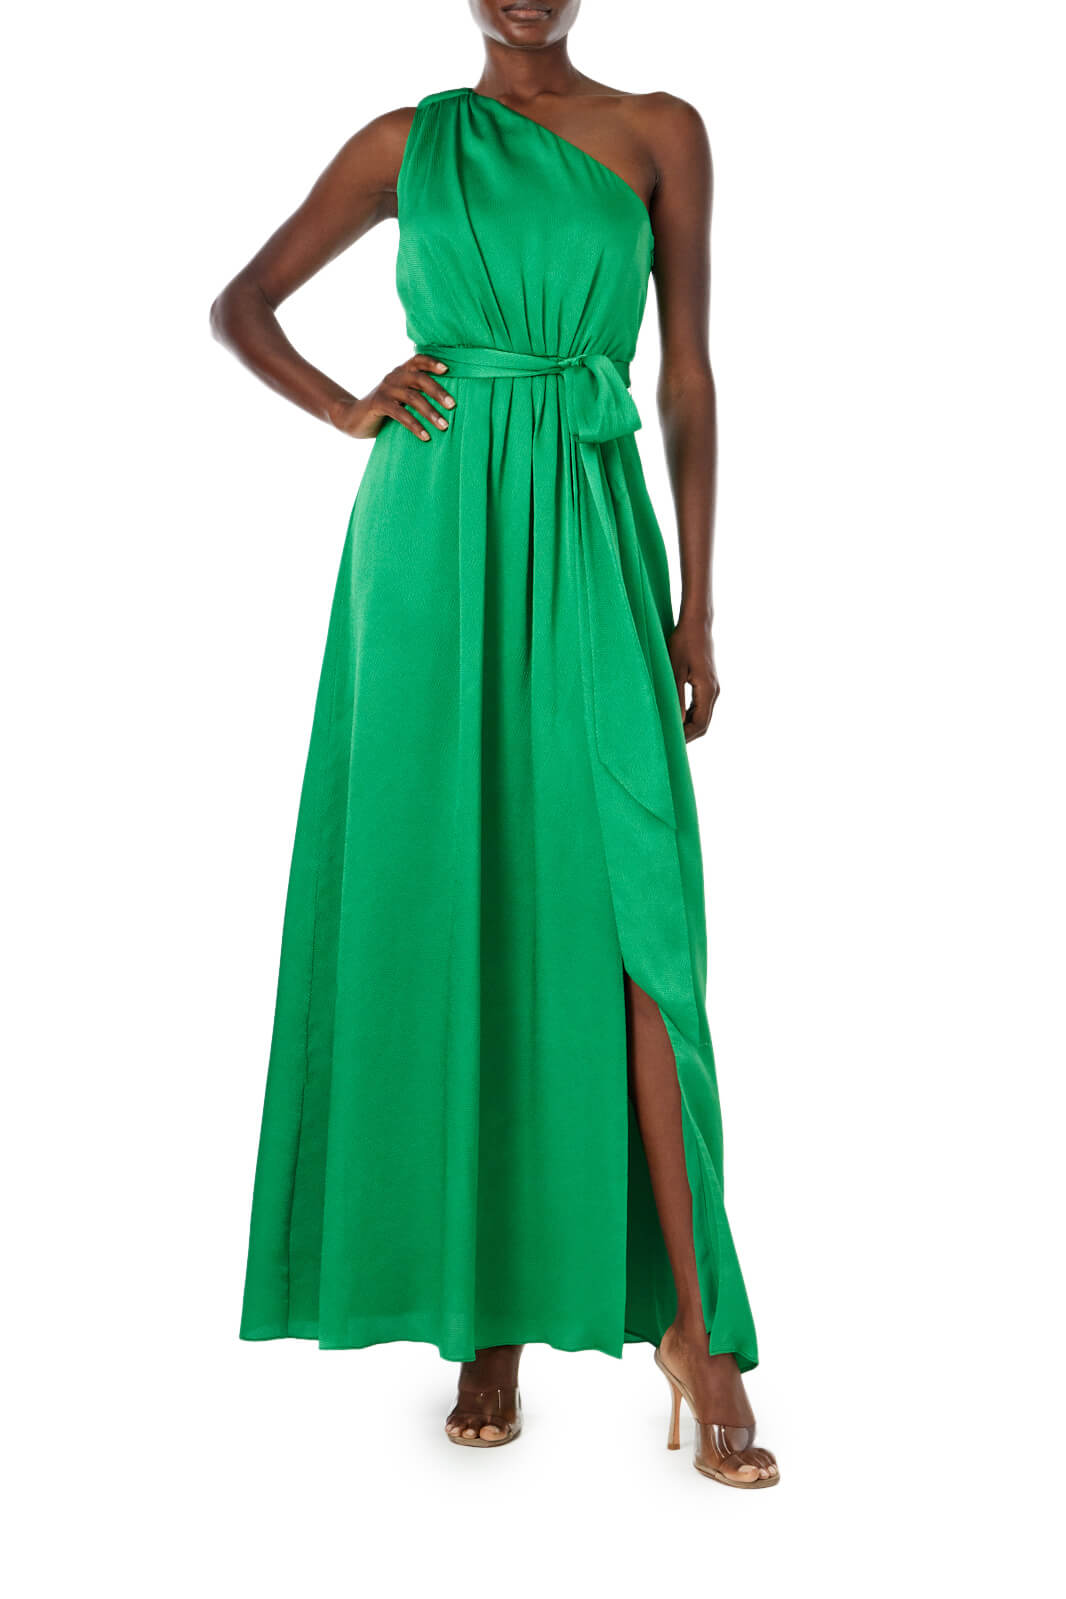 ML Monique Lhuillier green one shoulder long dress with high front slit.